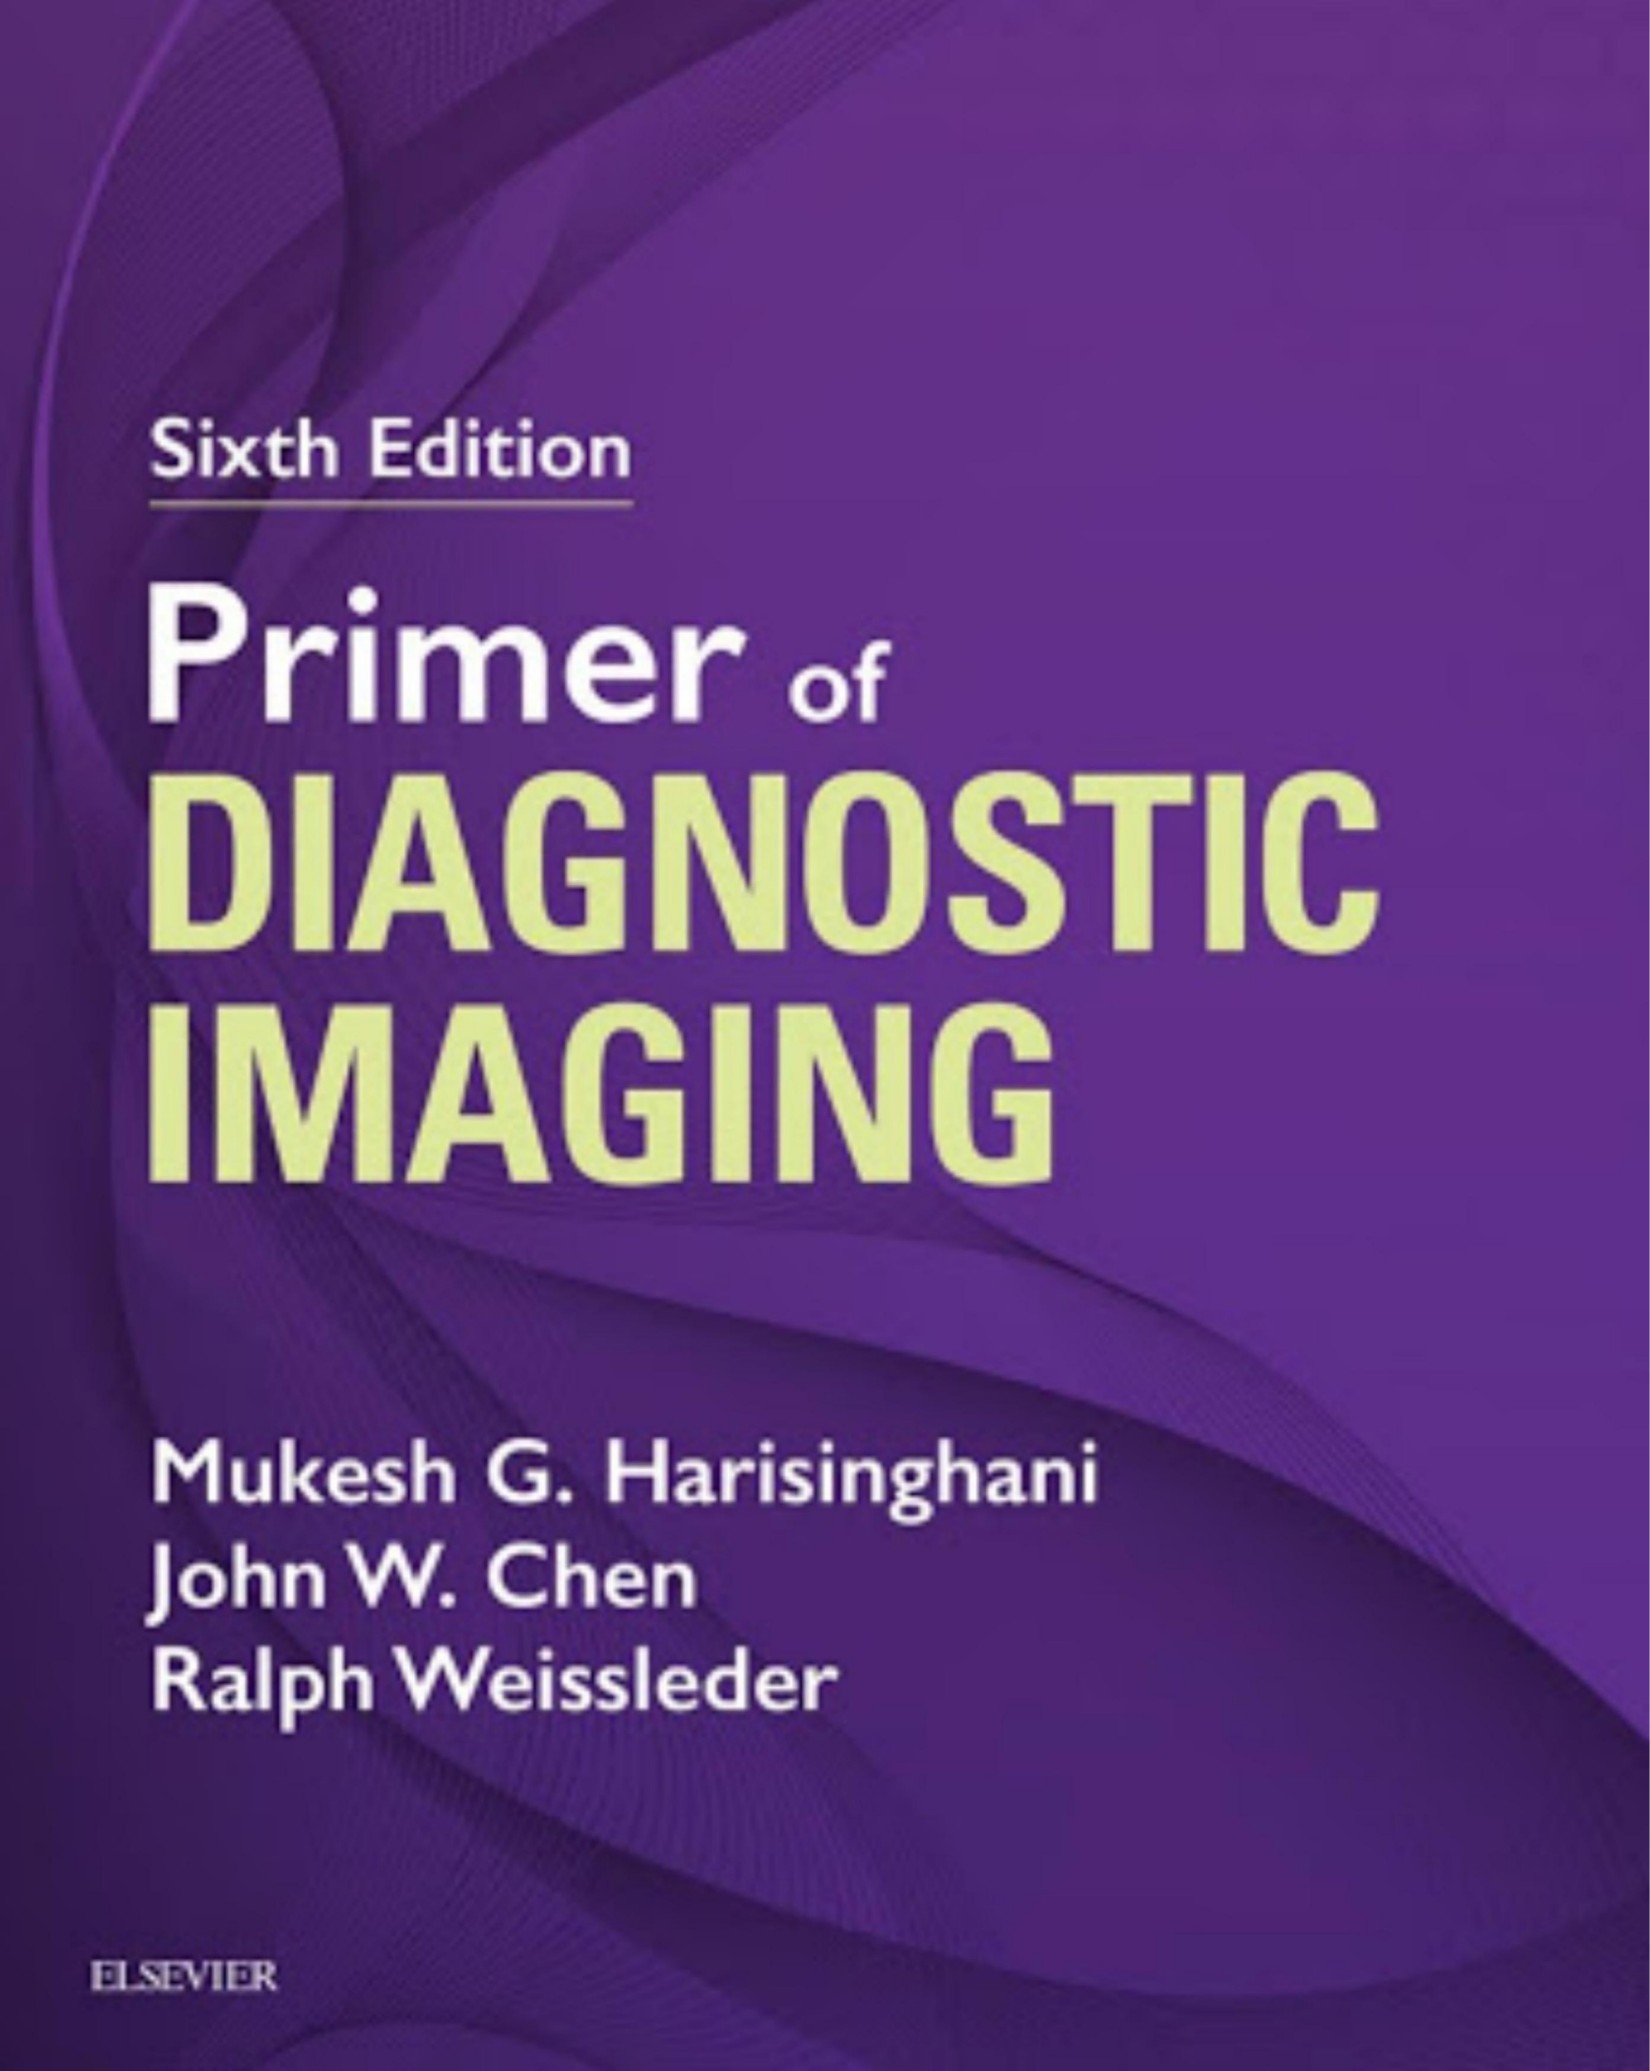 [Radiology and Imaging] Mukesh G. Harisinghani, John W. Chen, Ralph Weissleder